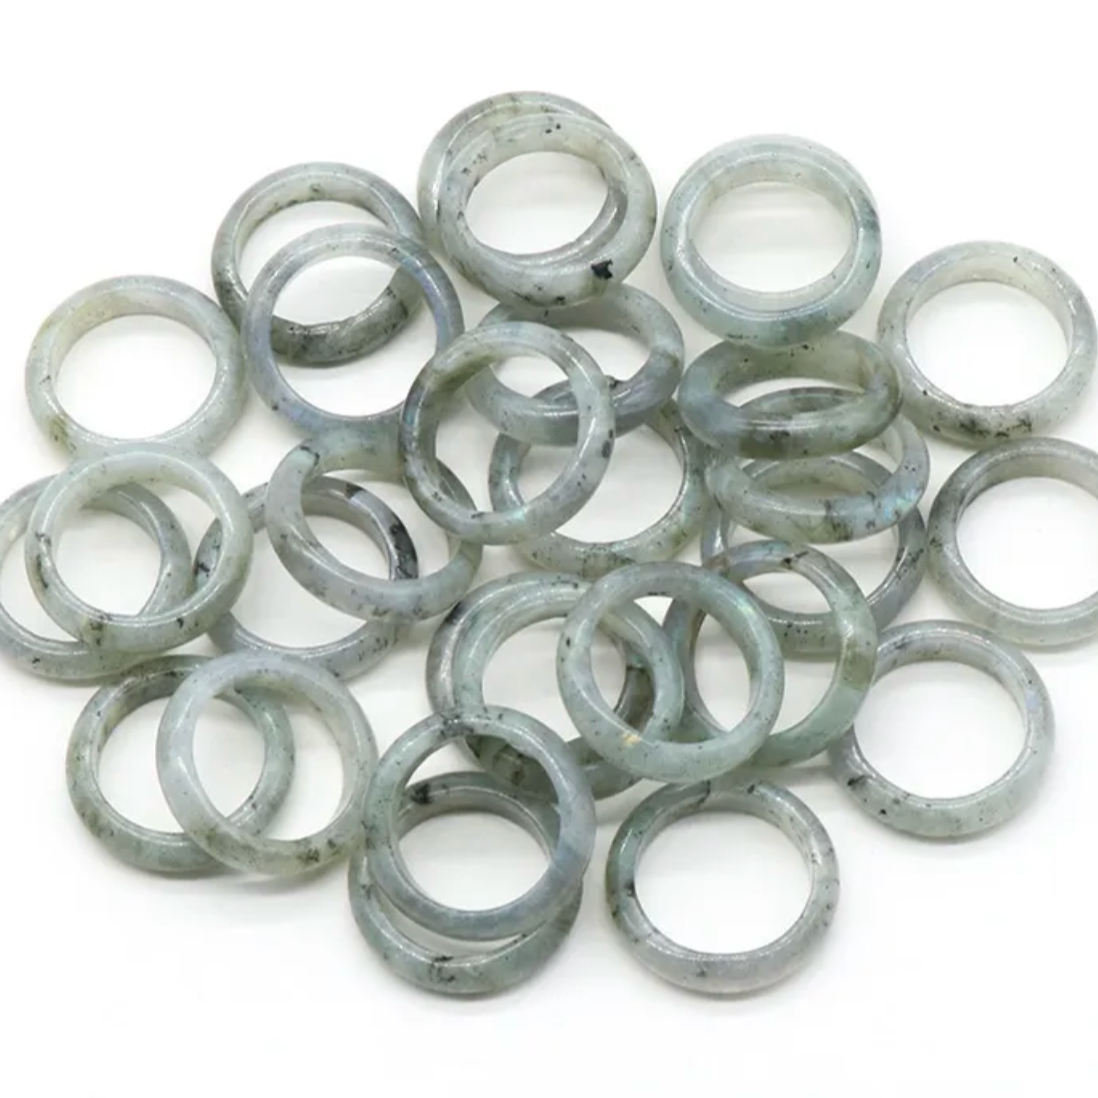 Labradorite band ring for men and women